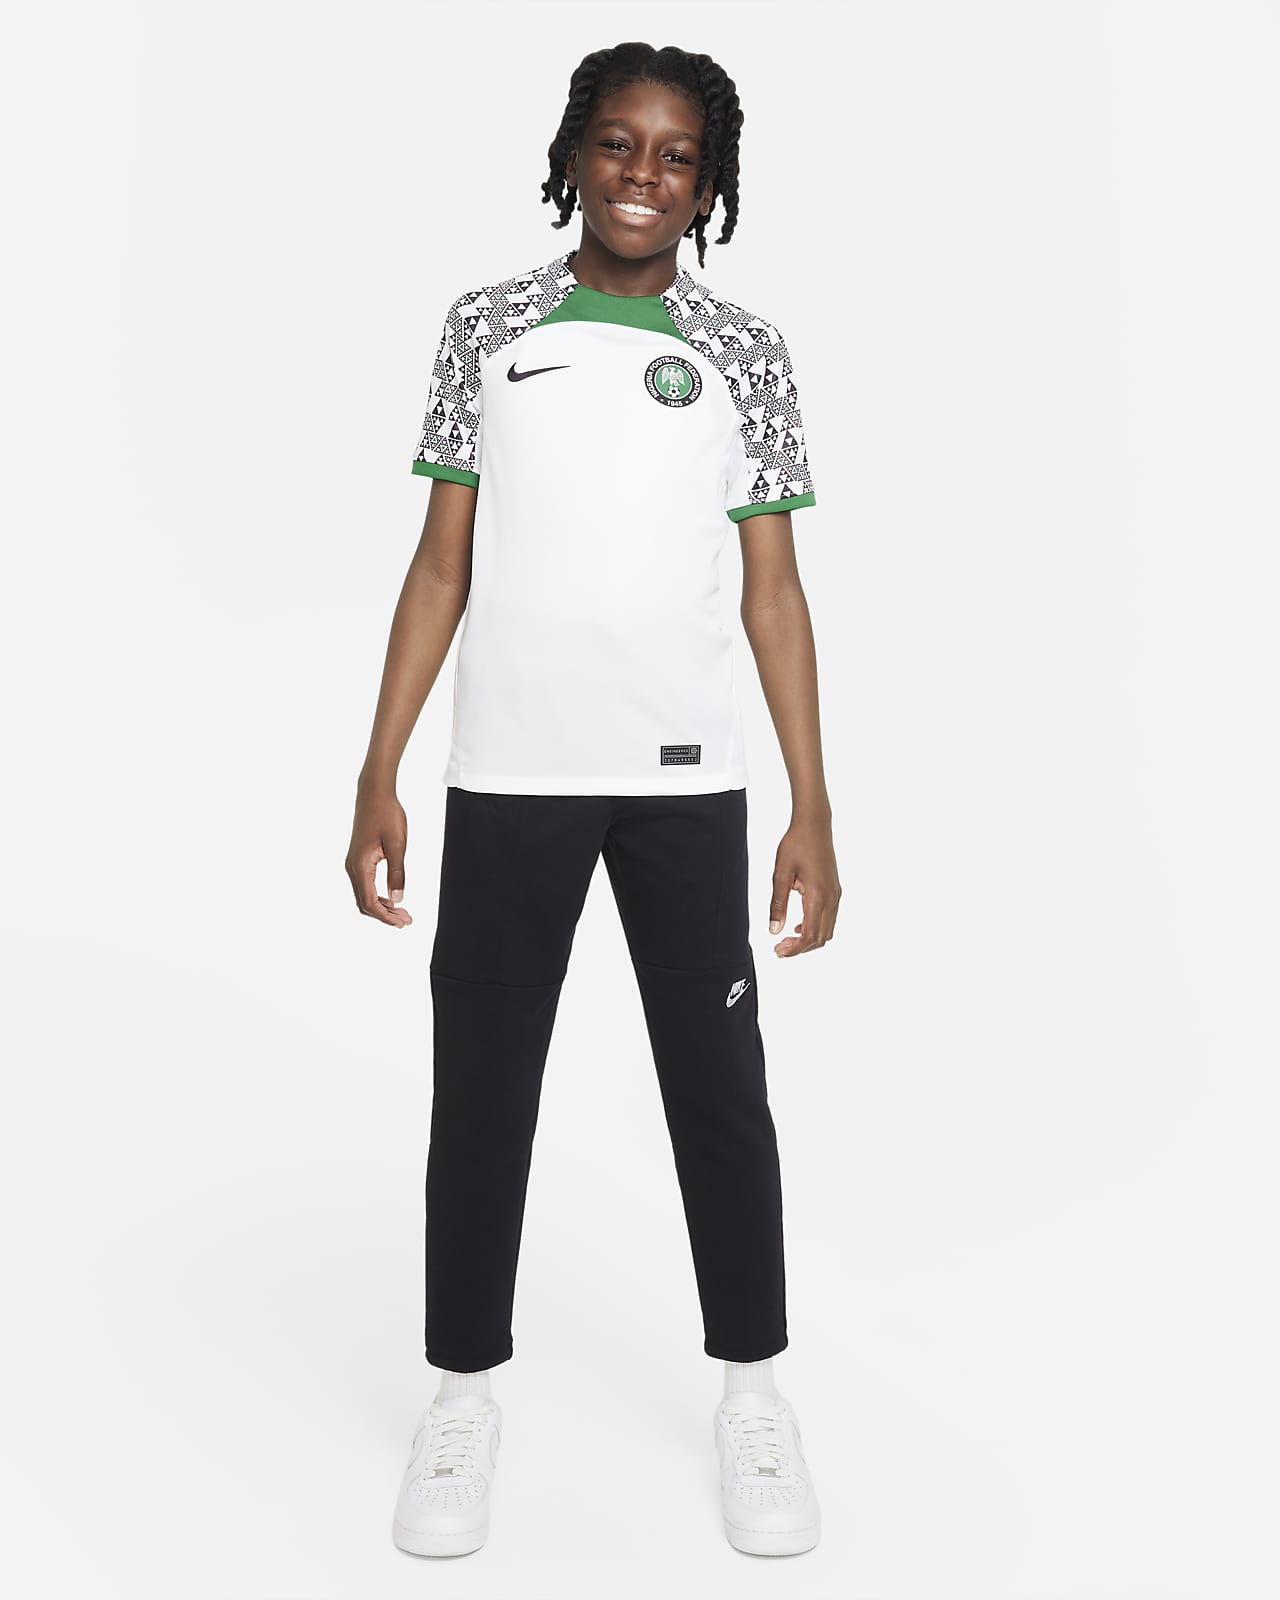 Nike Football Nigeria stadium home jersey in white